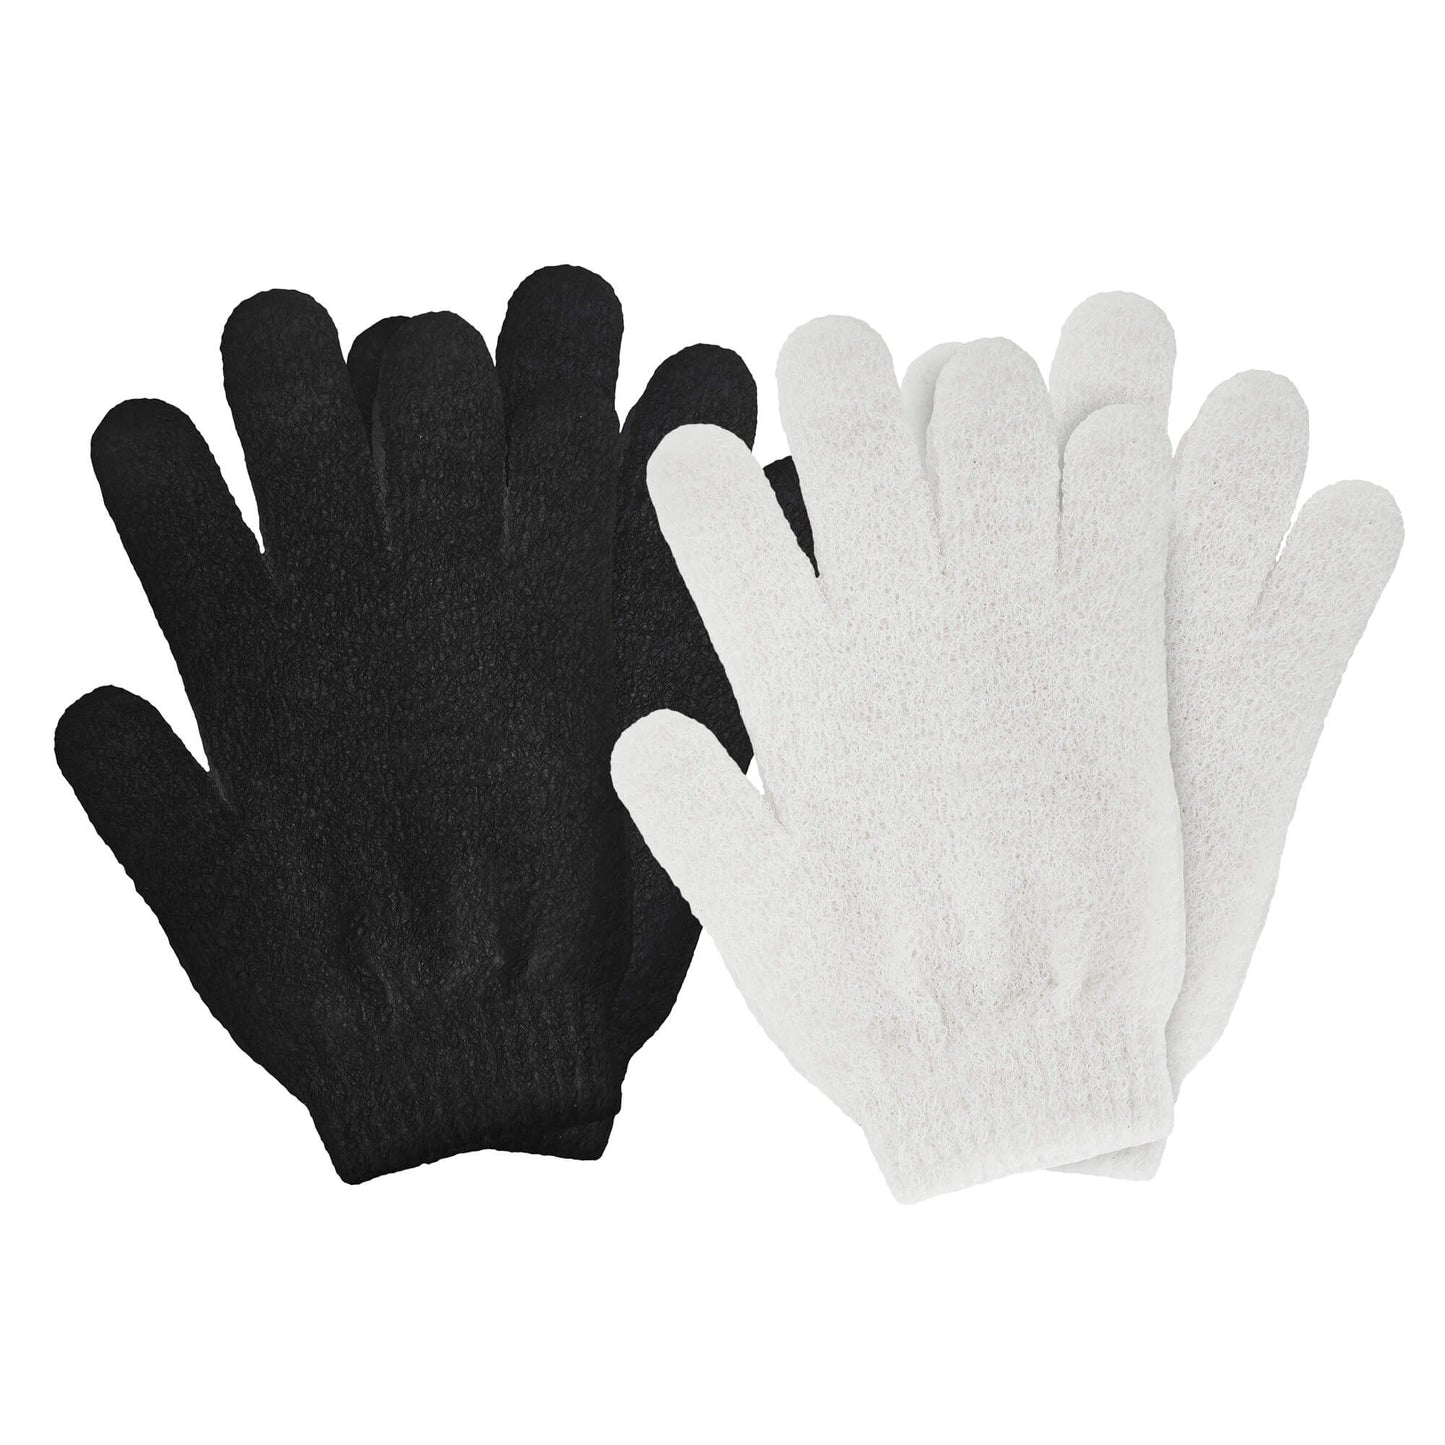 4 Exfoliating Gloves Set